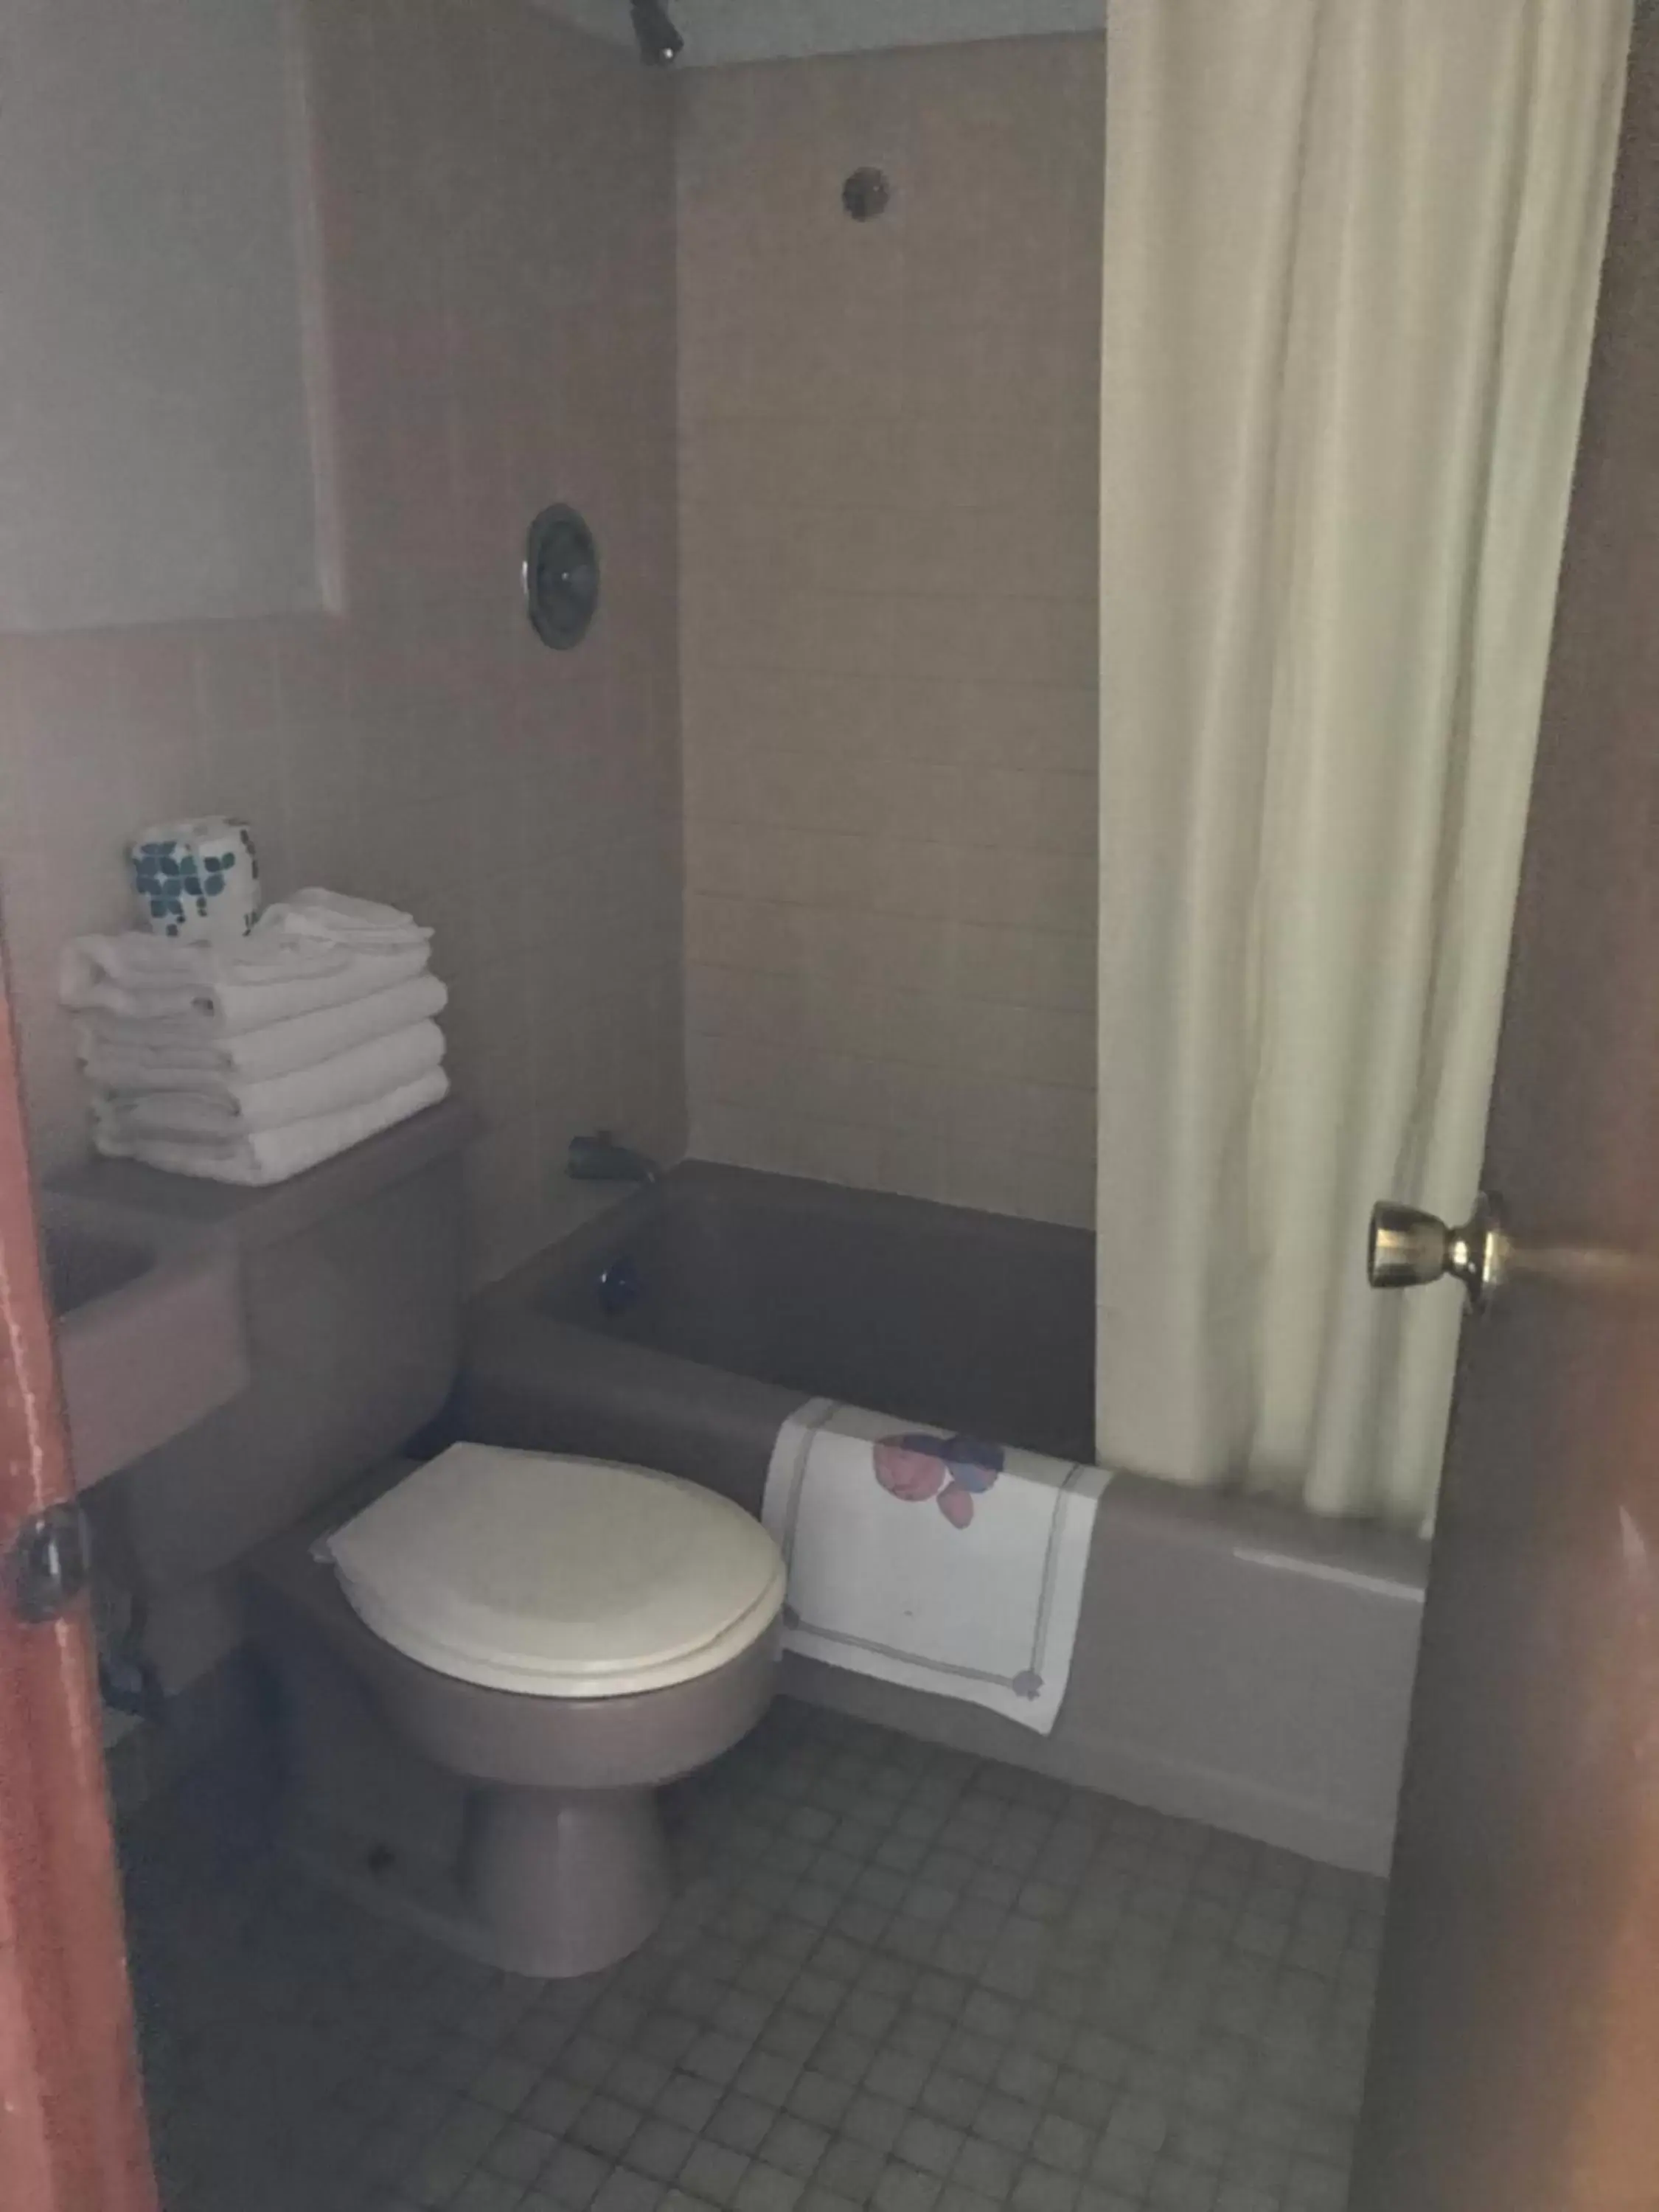 Bathroom in Yankee Clipper Resort Motel